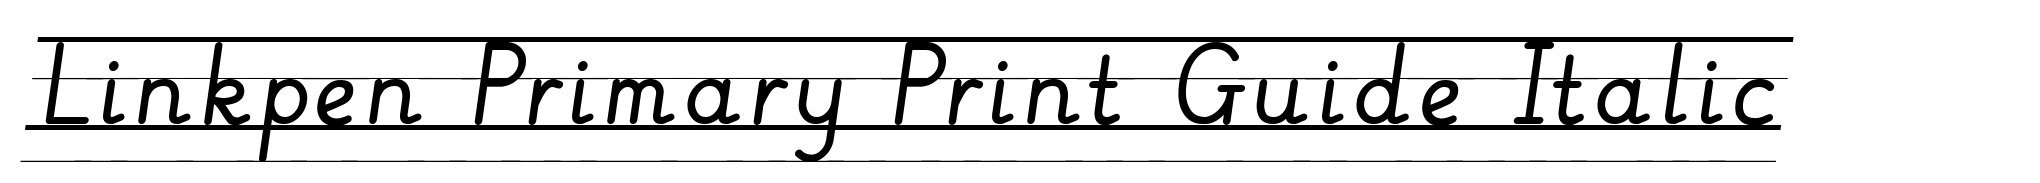 Linkpen Primary Print Guide Italic image